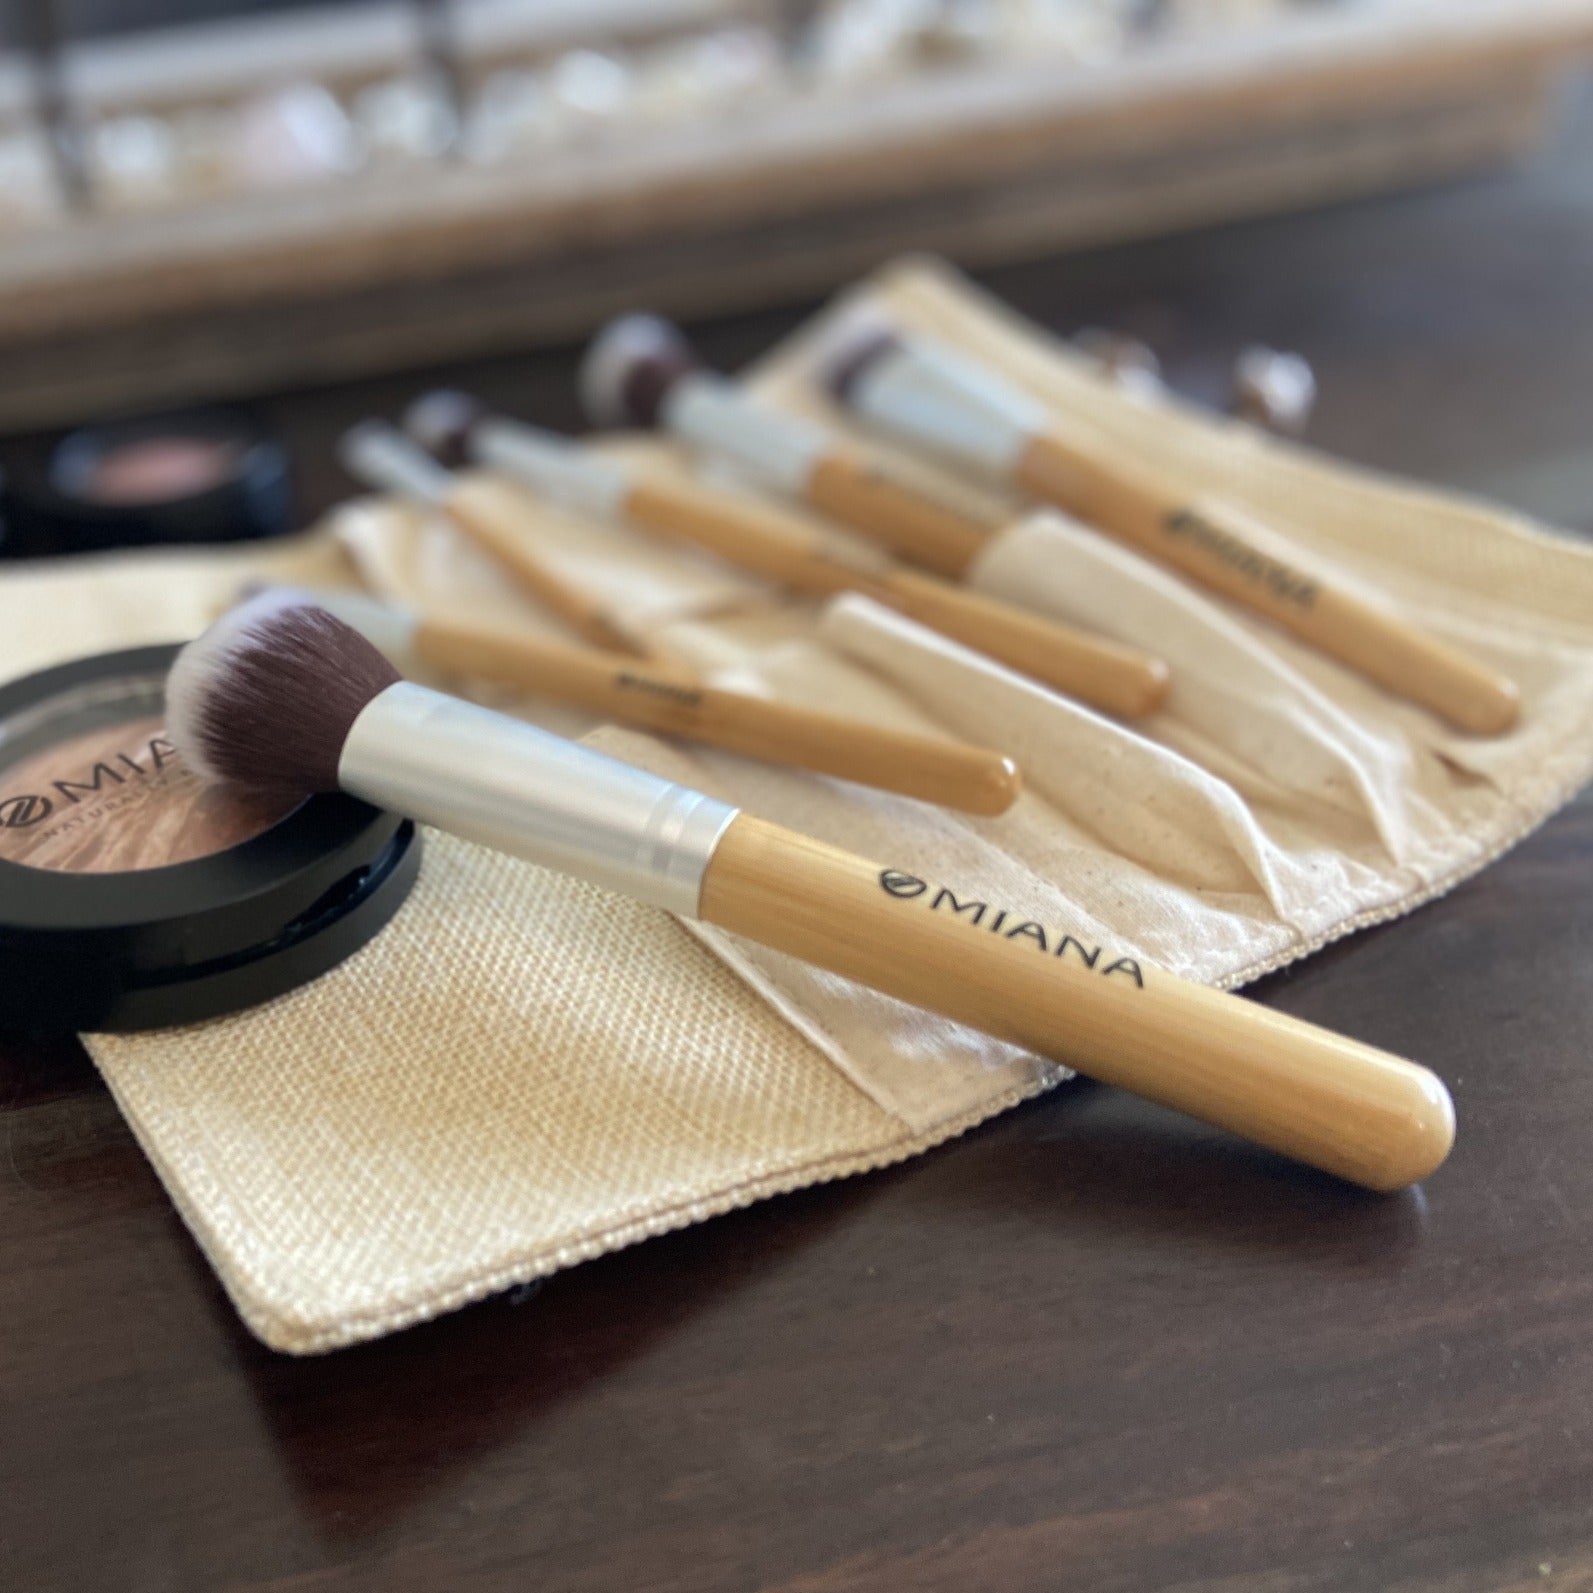 Vegan Bamboo Full Face Makeup 6-Brush Kit with Case - Omiana Beauty